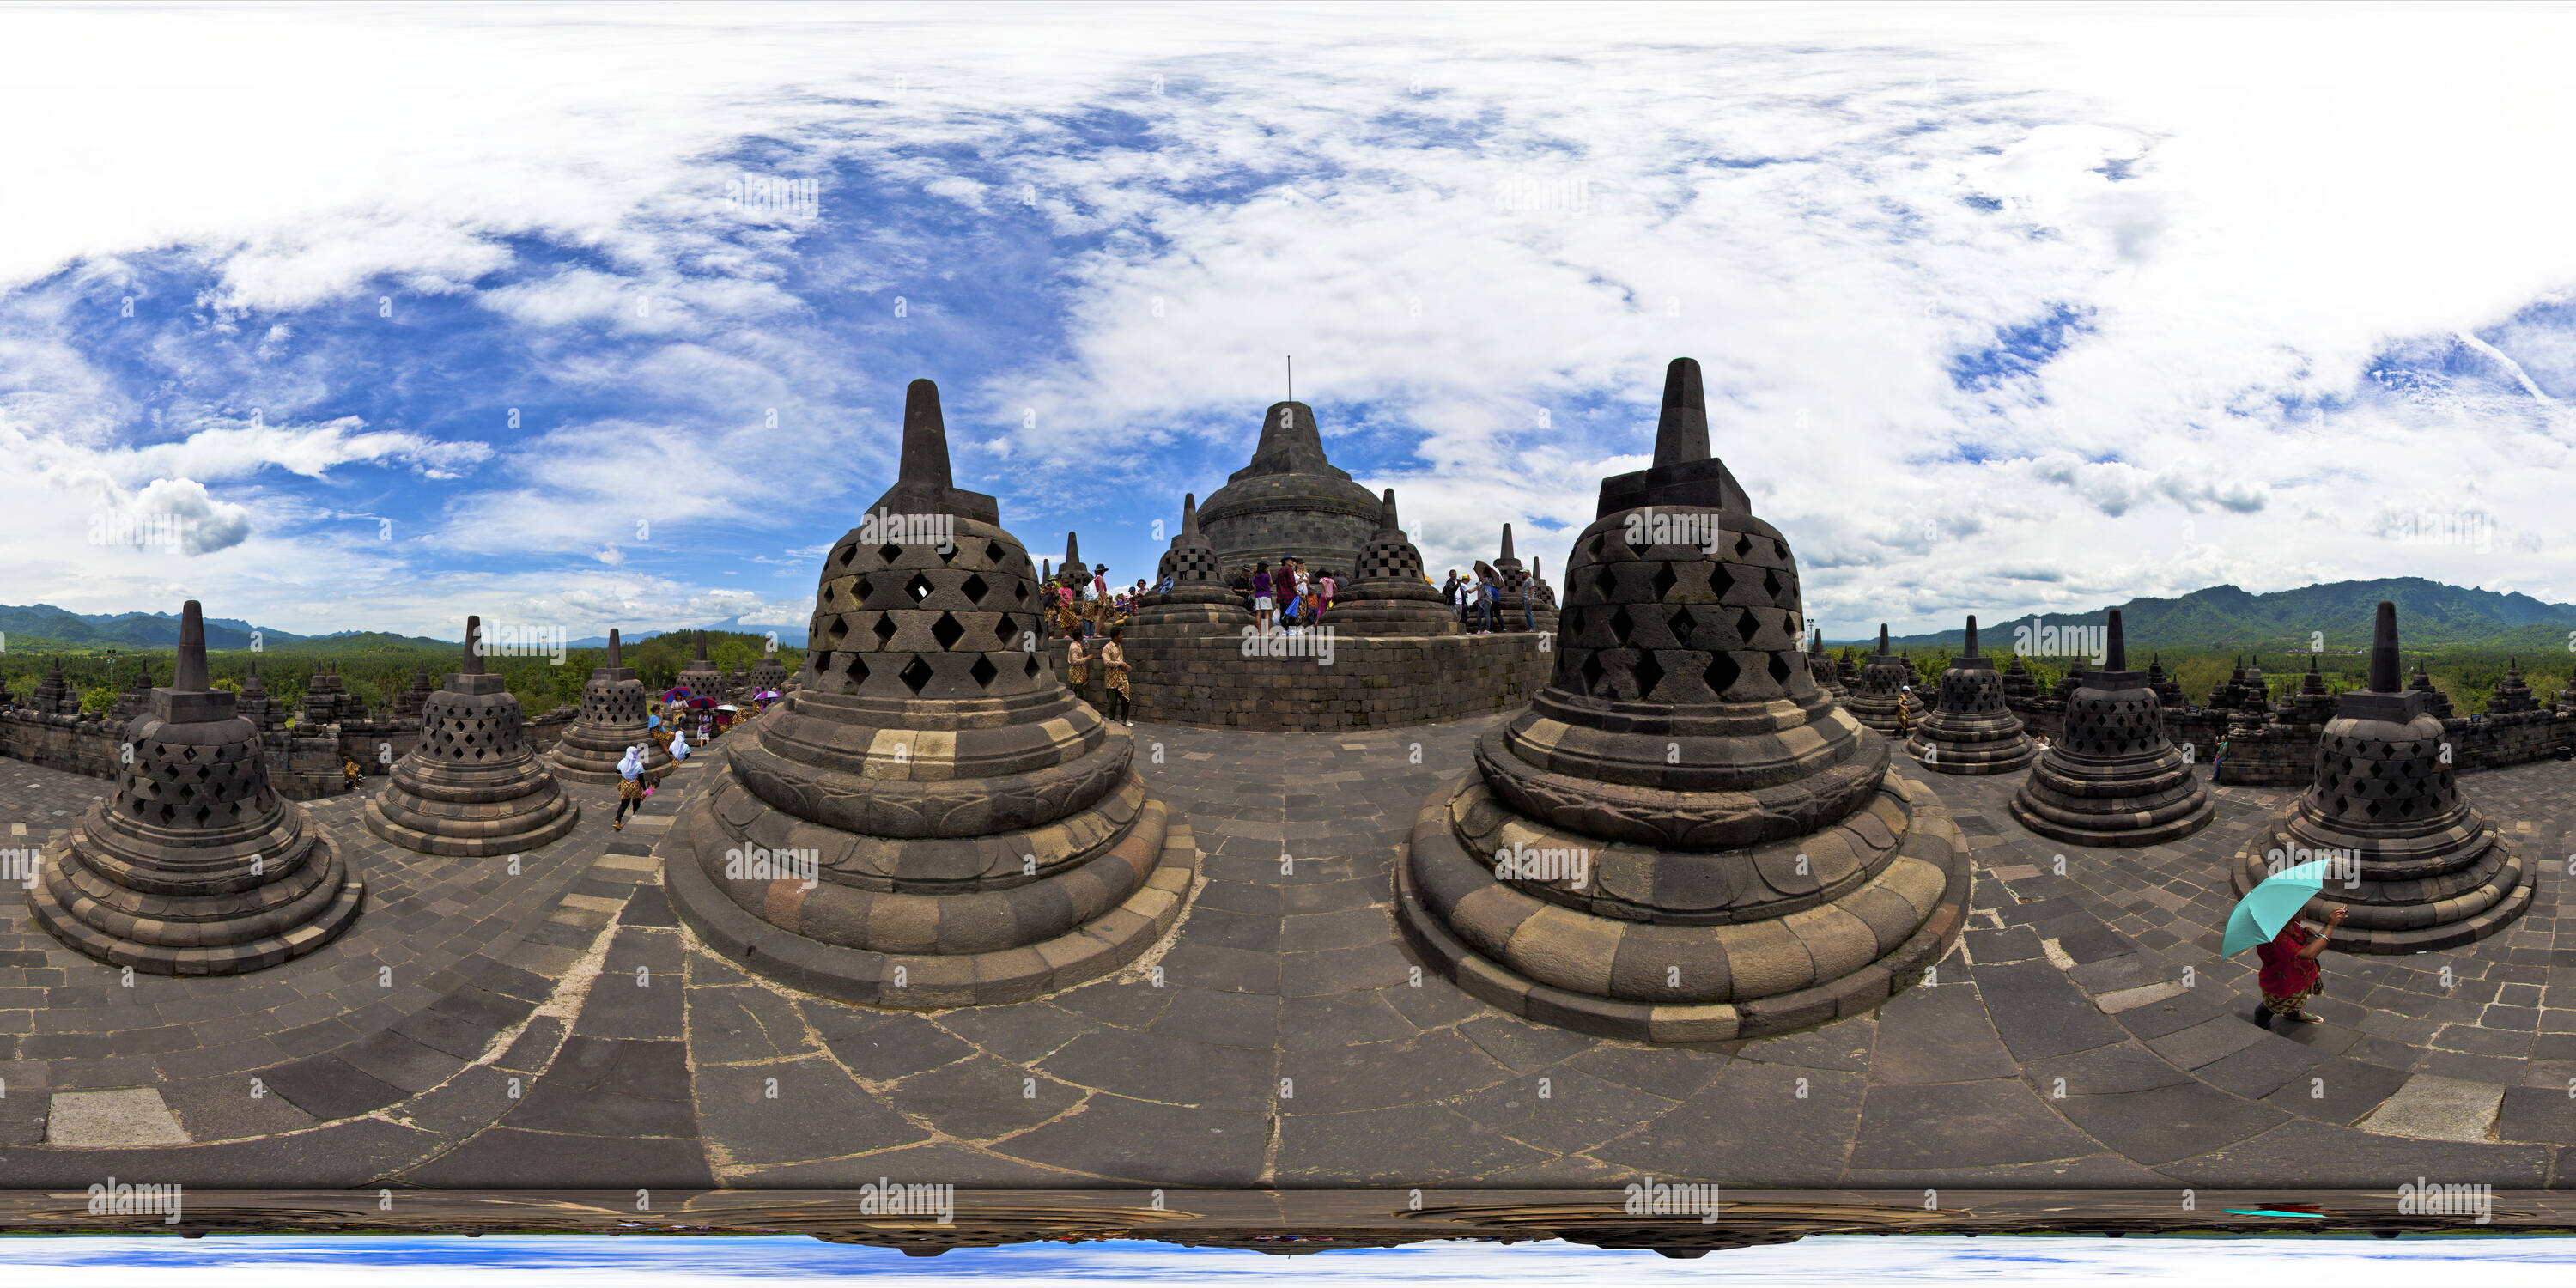 360 degree panoramic view of Find Nirvana at Borobudur